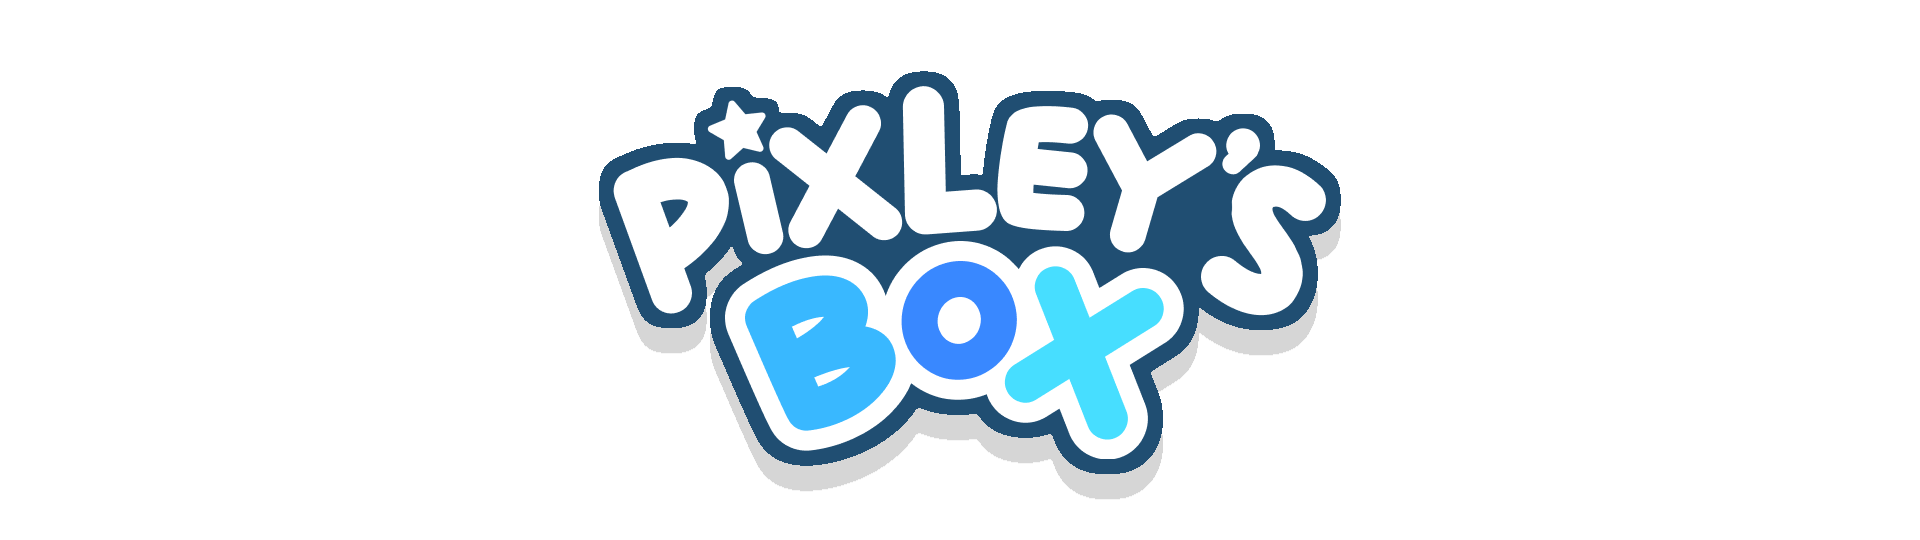 Pixley's Box! [110+ ASSETS]